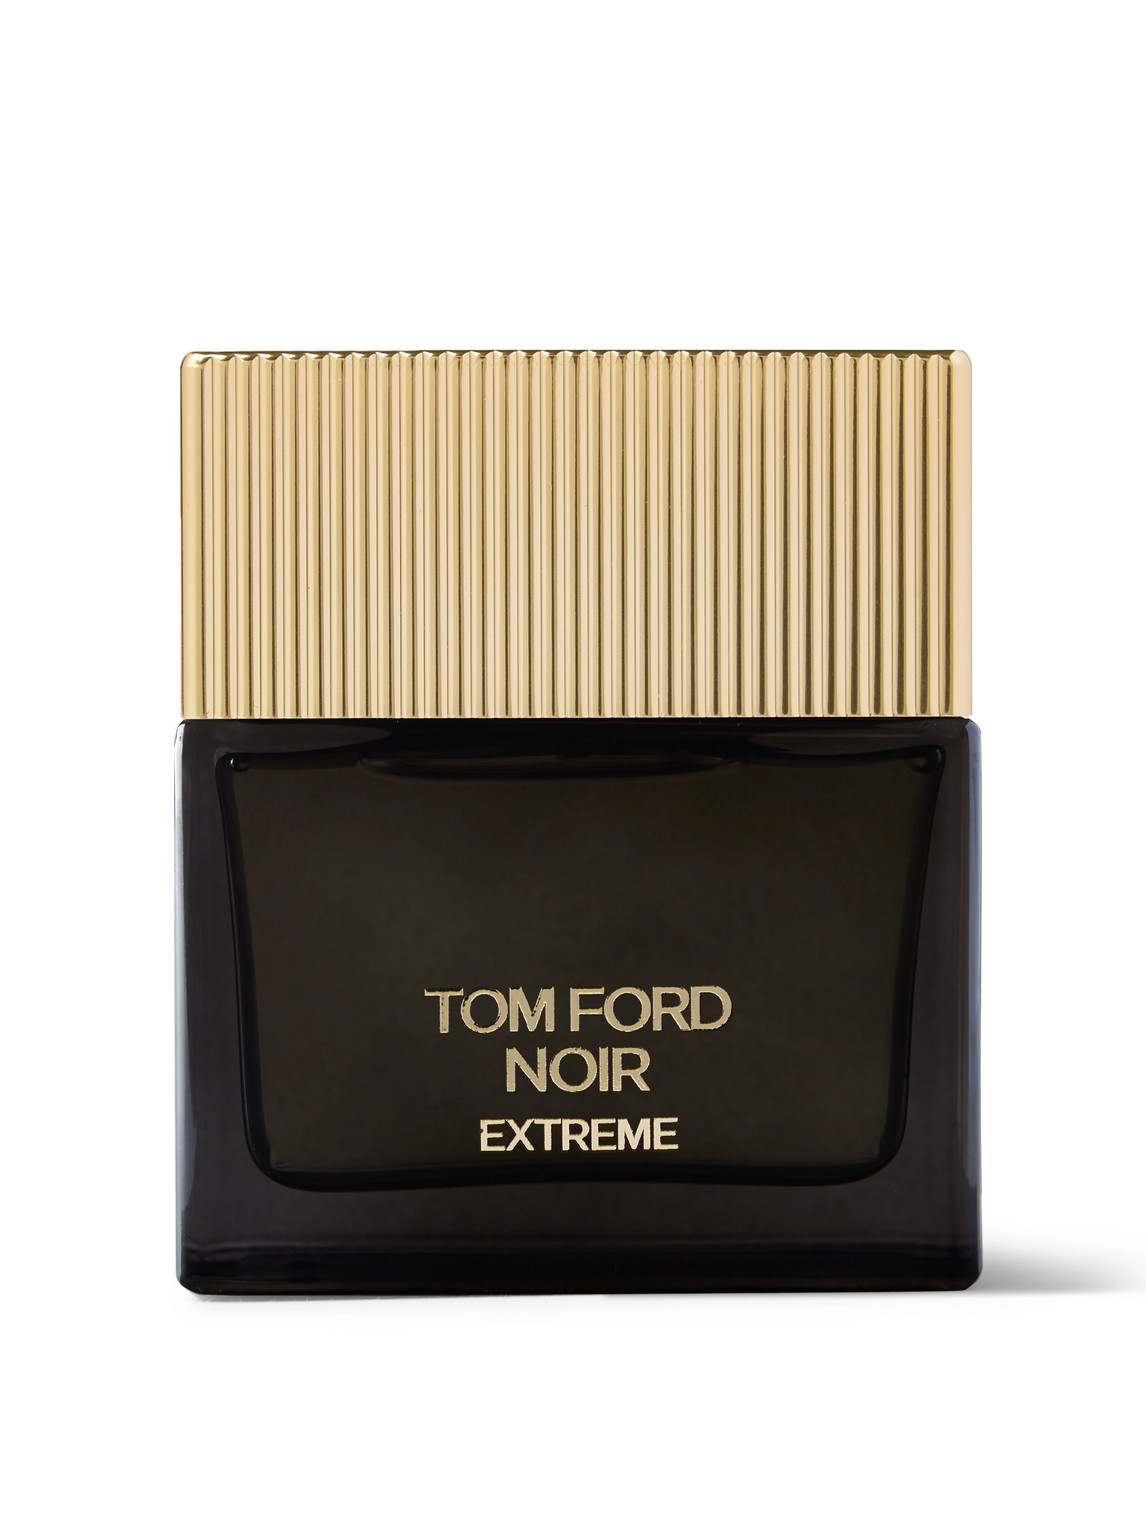 Tom Ford Noir Extreme Eau De Parfum, 50ml In White